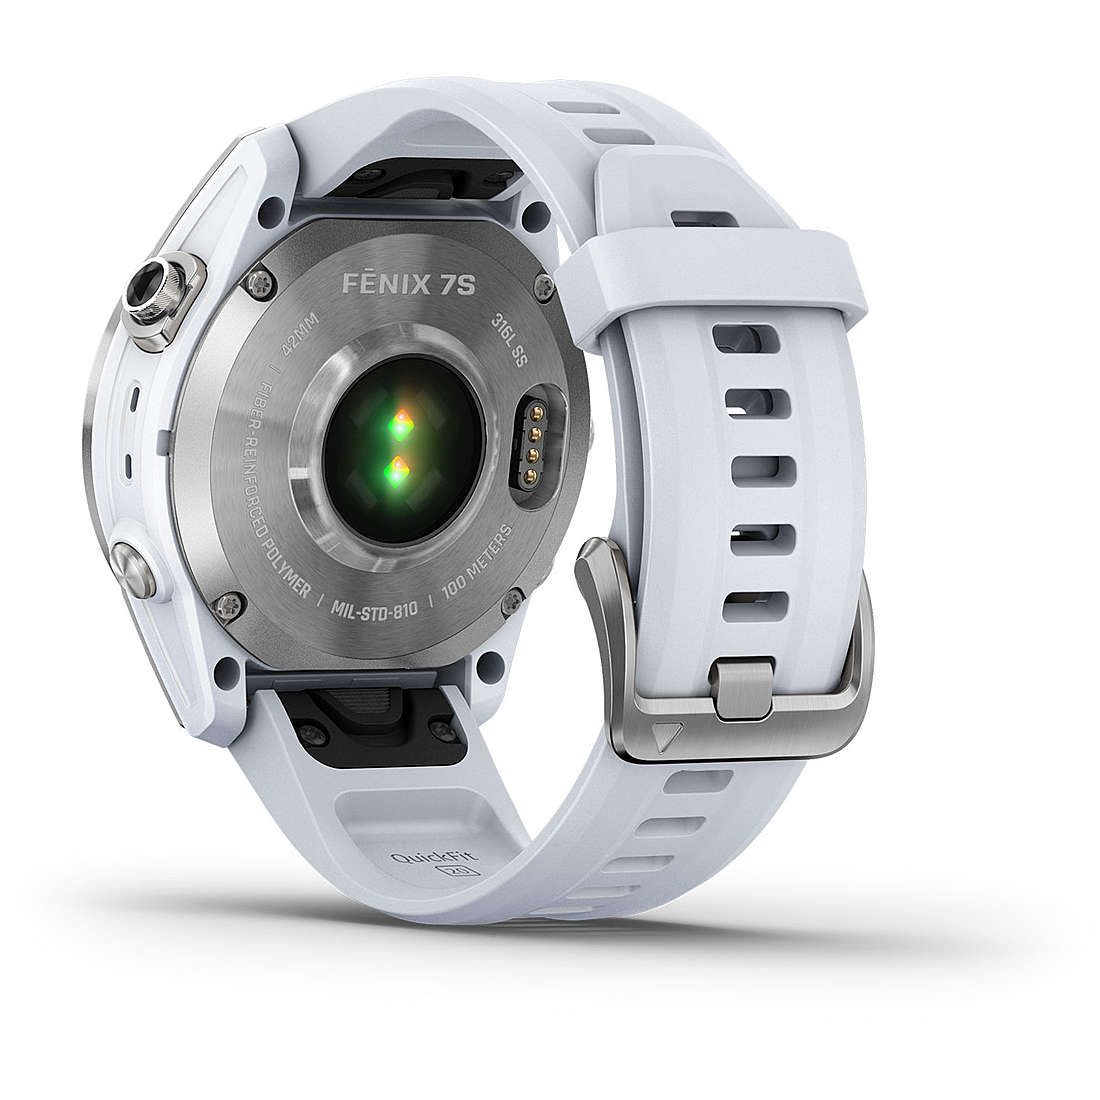 Smartwatch Garmin Fenix orologio unisex 010-02539-03